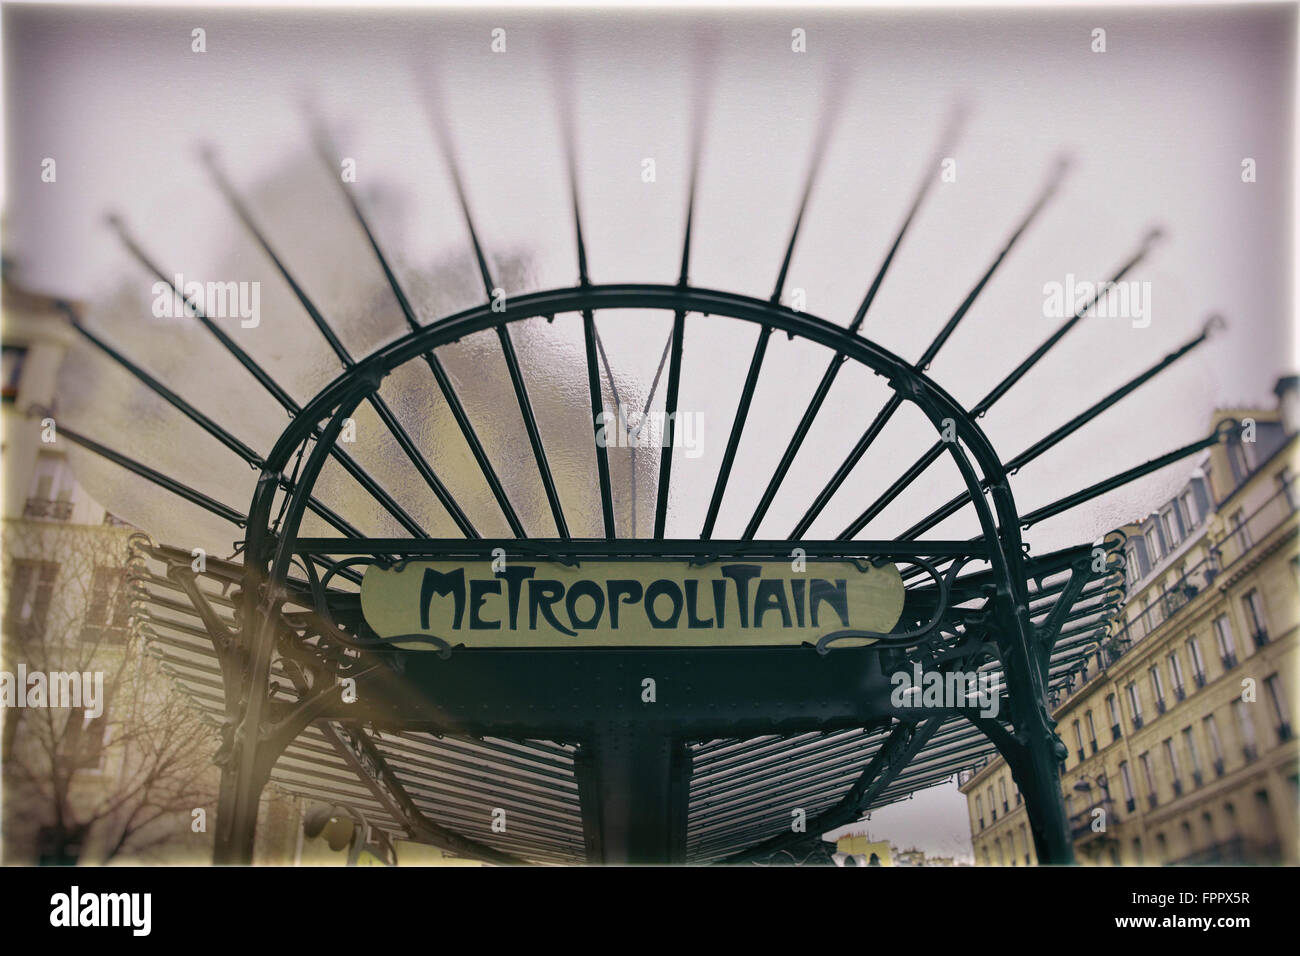 - Metro metropolitain parisino firmar Foto de stock